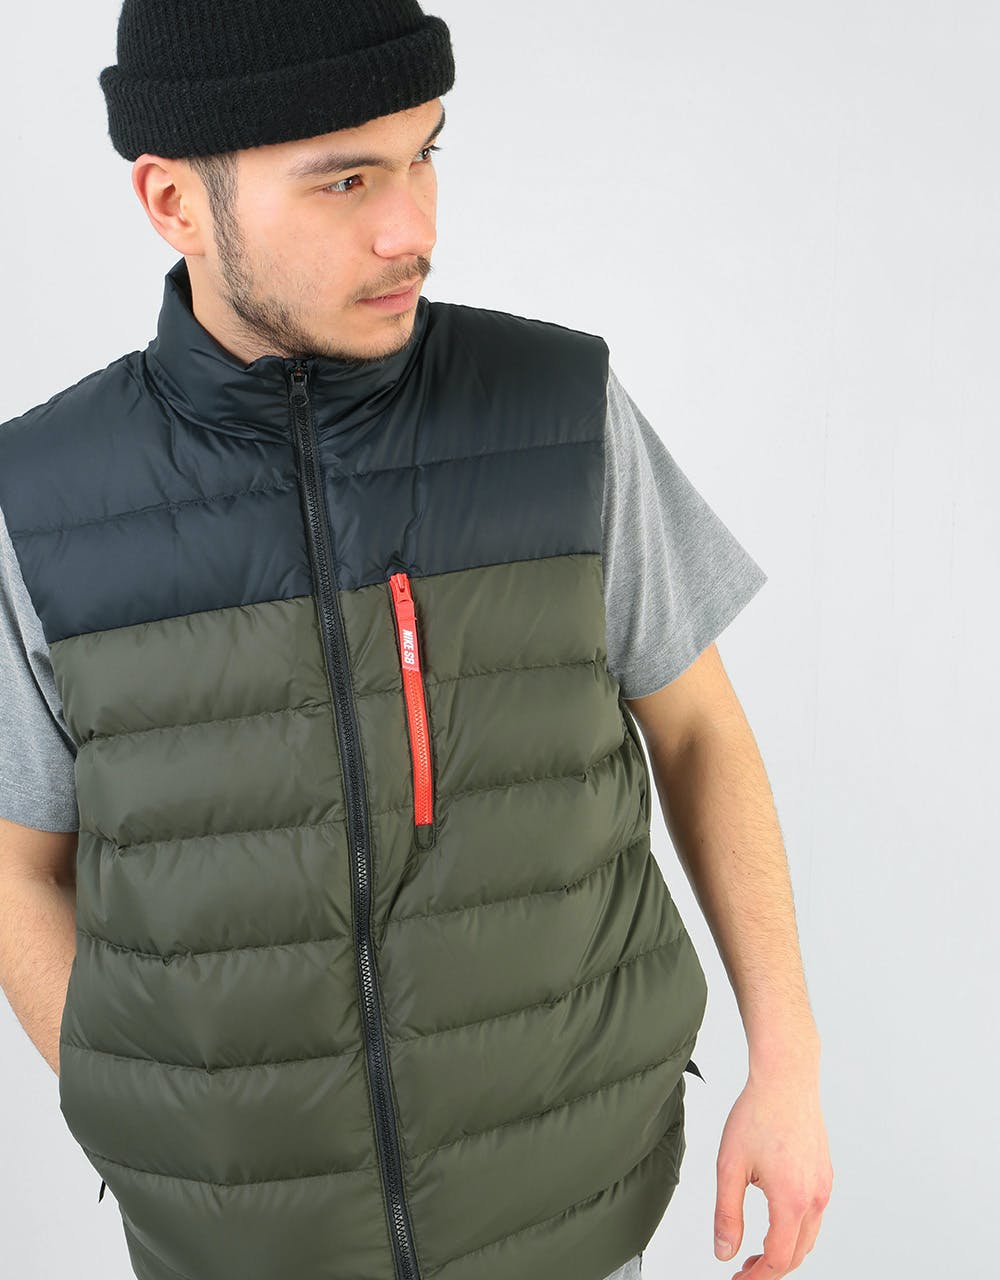 Nike SB Packable Down Vest - Black/Sequoia/Black